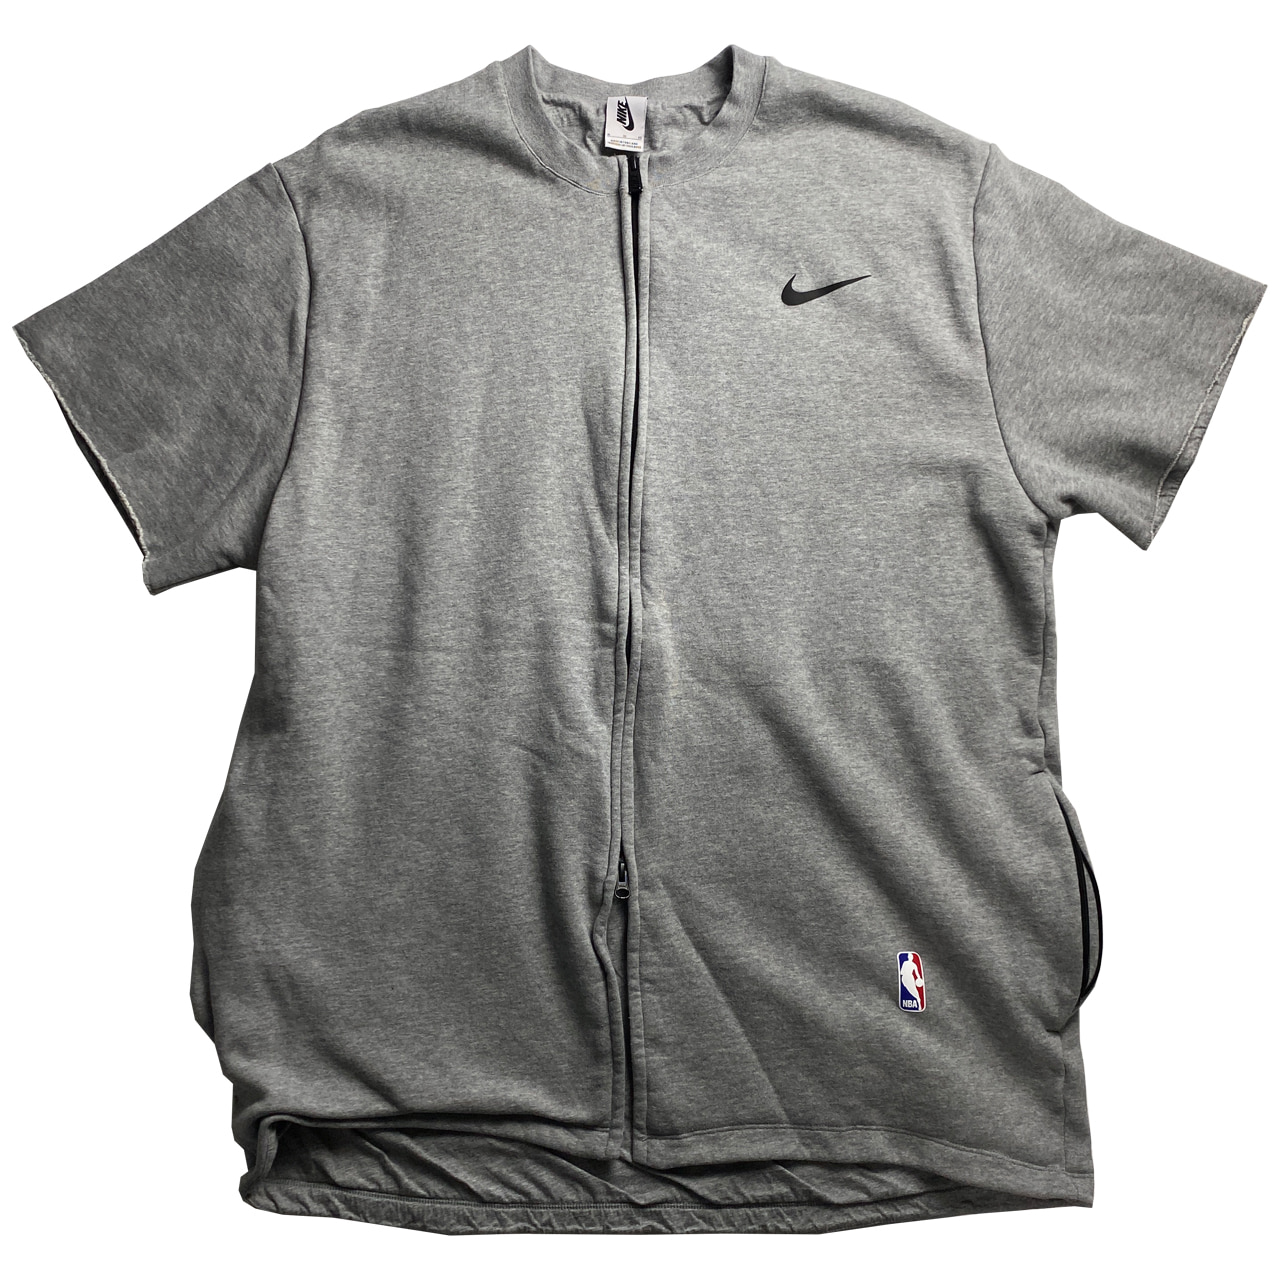 [Nike] Nike X Fear Of God Short Sleeve Warm Up Top - Size XL